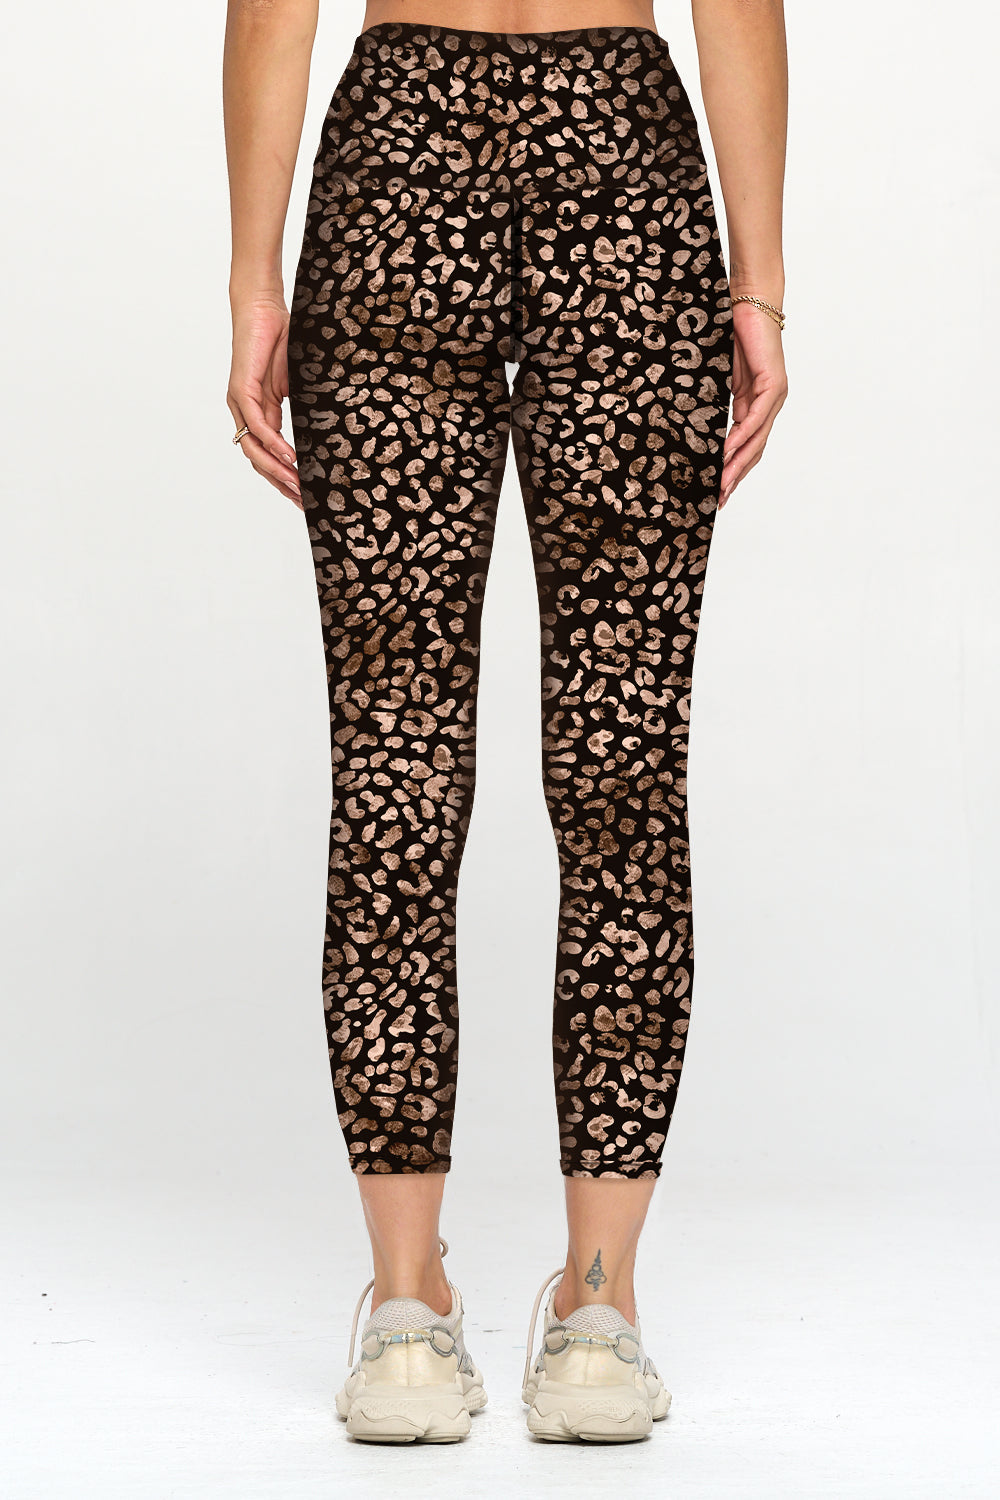 Cristina - Black and Golden Cheetah Cross Over 7/8 Legging (High-Waist) - LIMITED EDITION